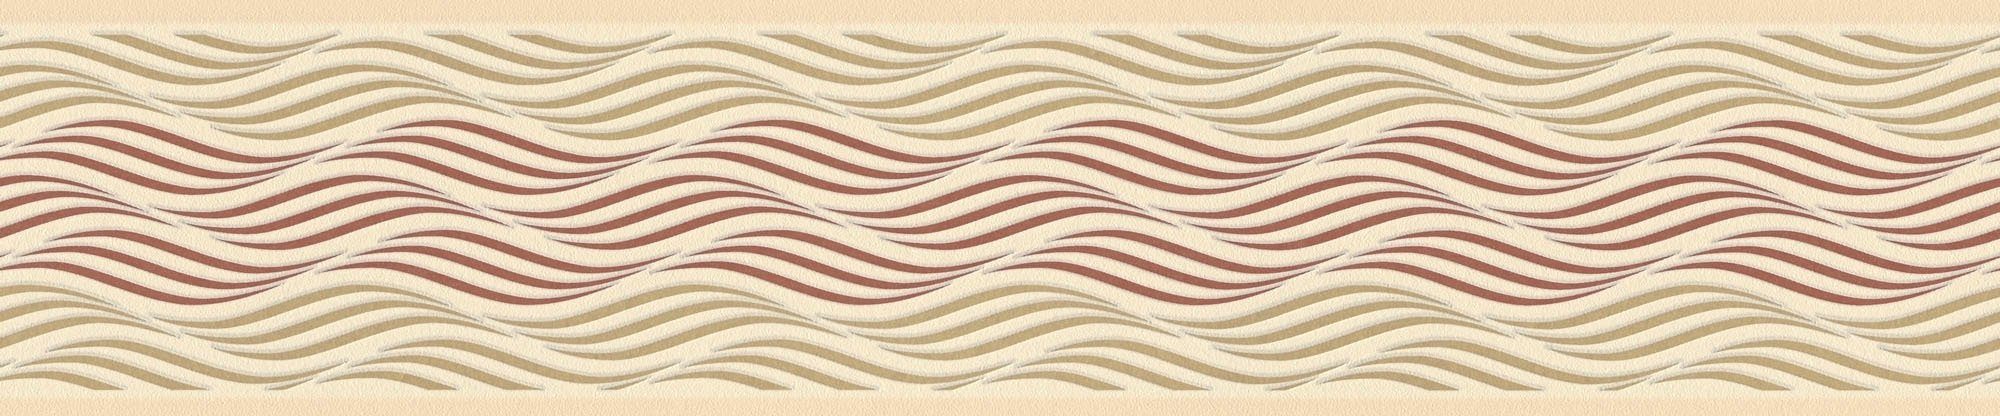 Création Only Metallic beige/braun strukturiert, Tapete 11, Wellen Bordüre Borders abstrakt, Bordüre matt, Streifen, A.S.